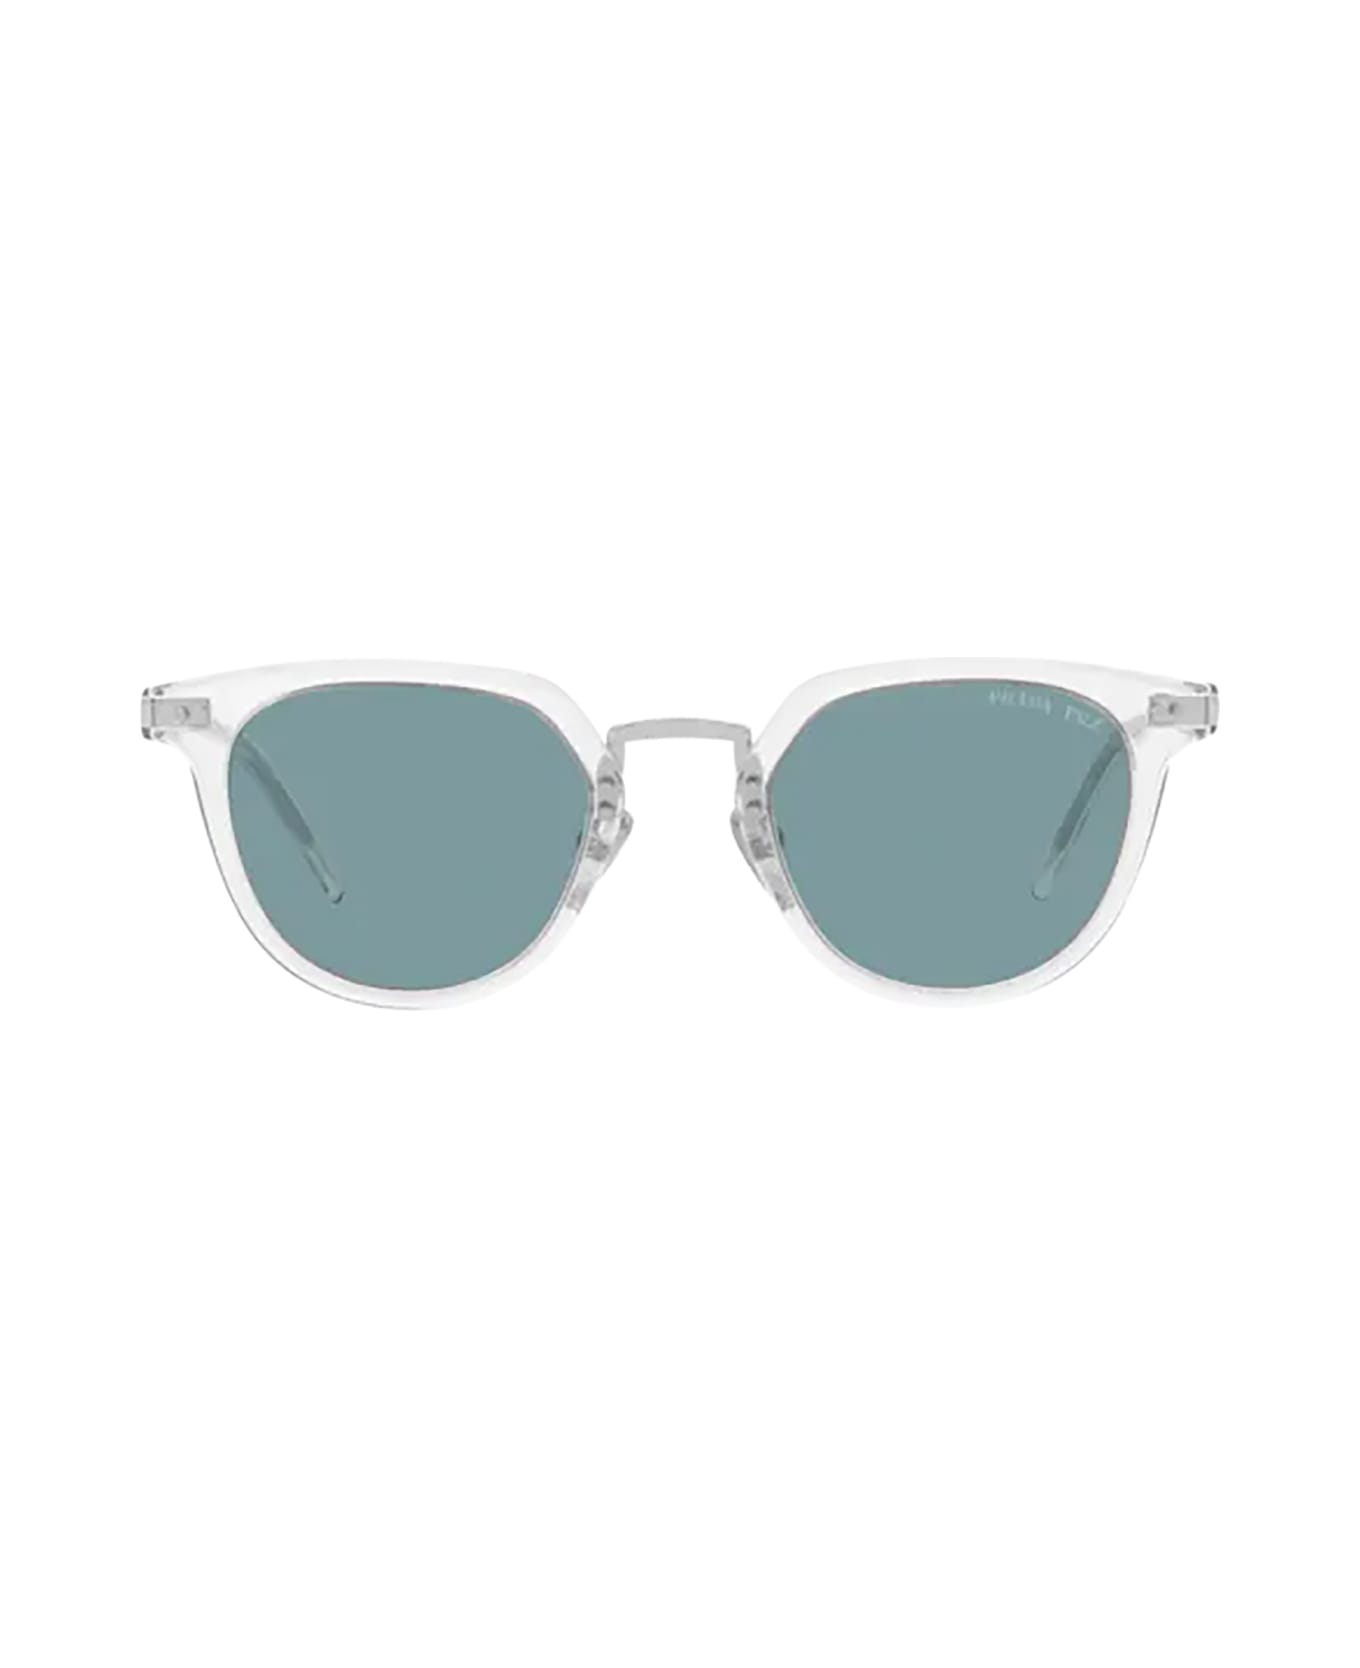 Prada Eyewear Pr 17ys Crystal Sunglasses - Crystal サングラス